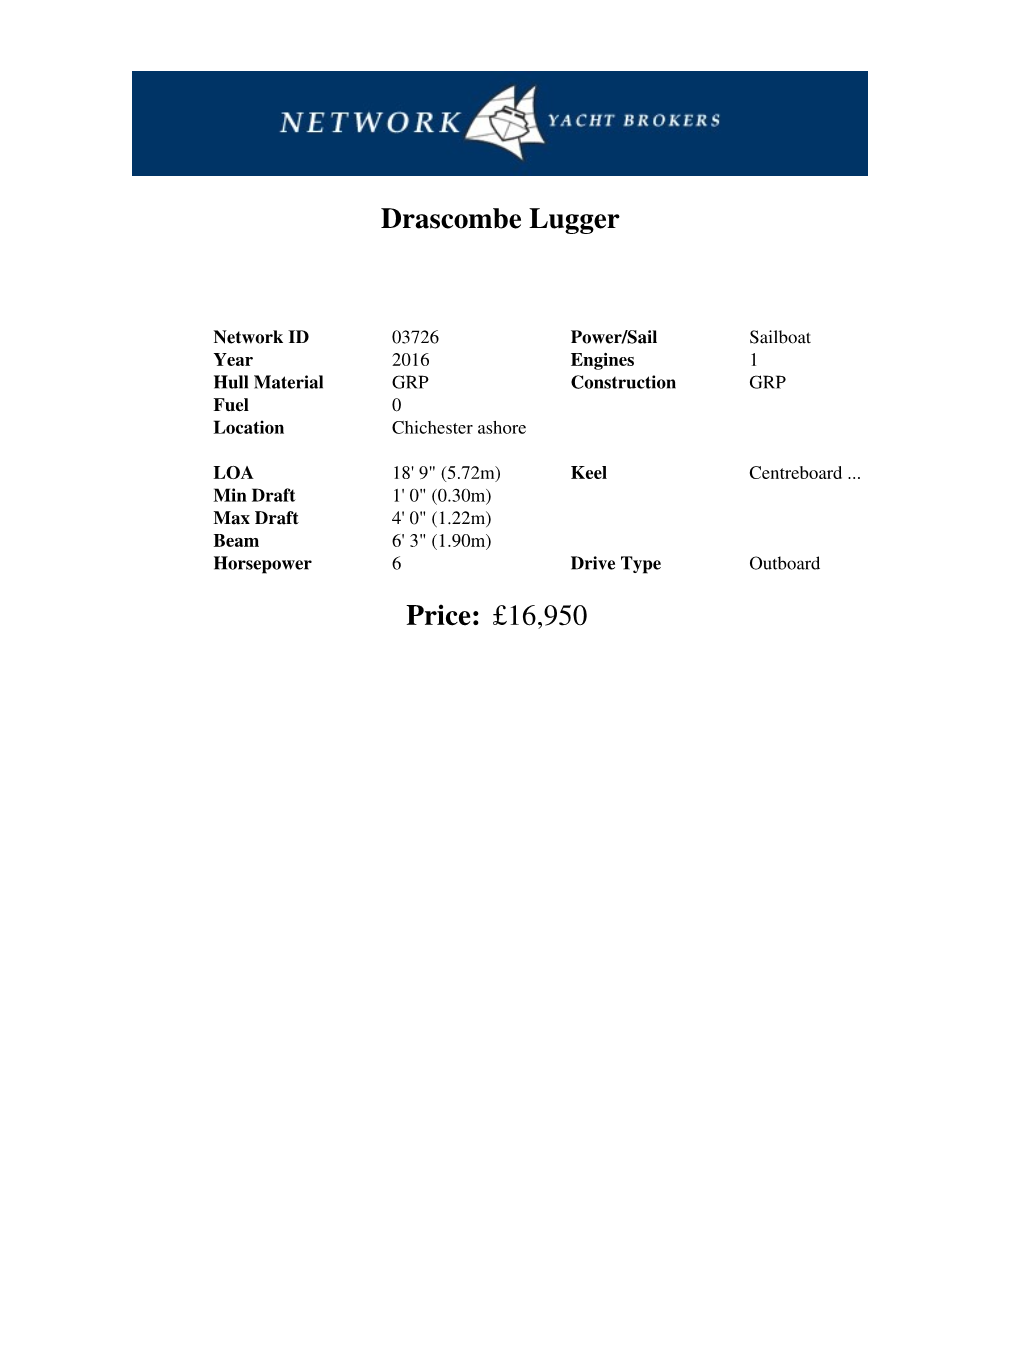 Drascombe Lugger Price: £16,950